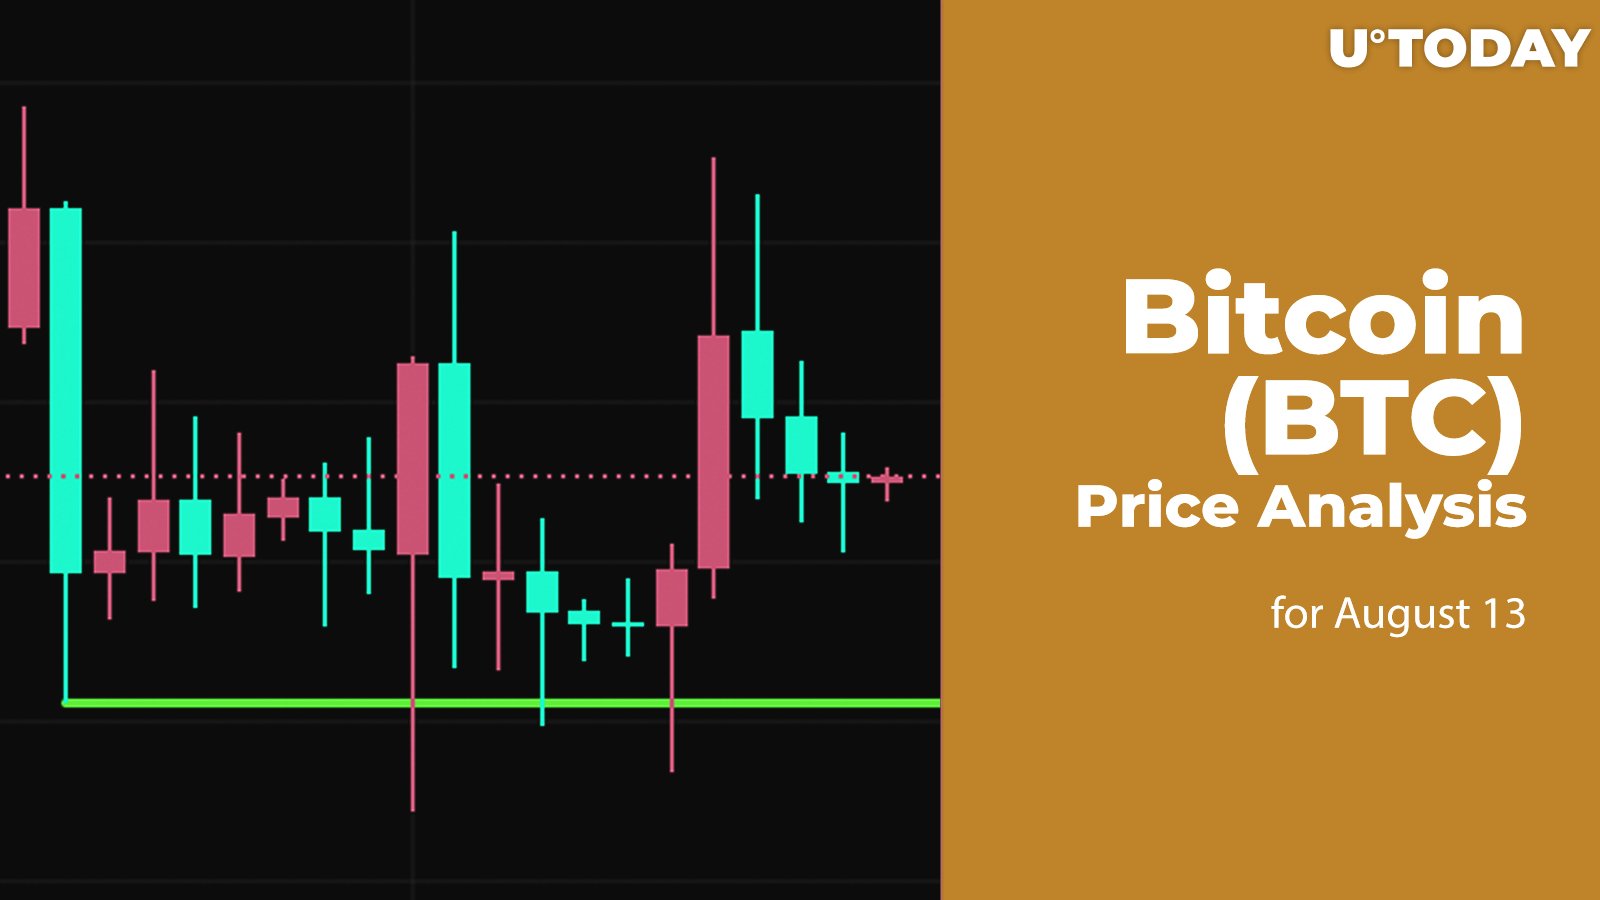 Bitcoin (BTC) Price Analysis for August 13